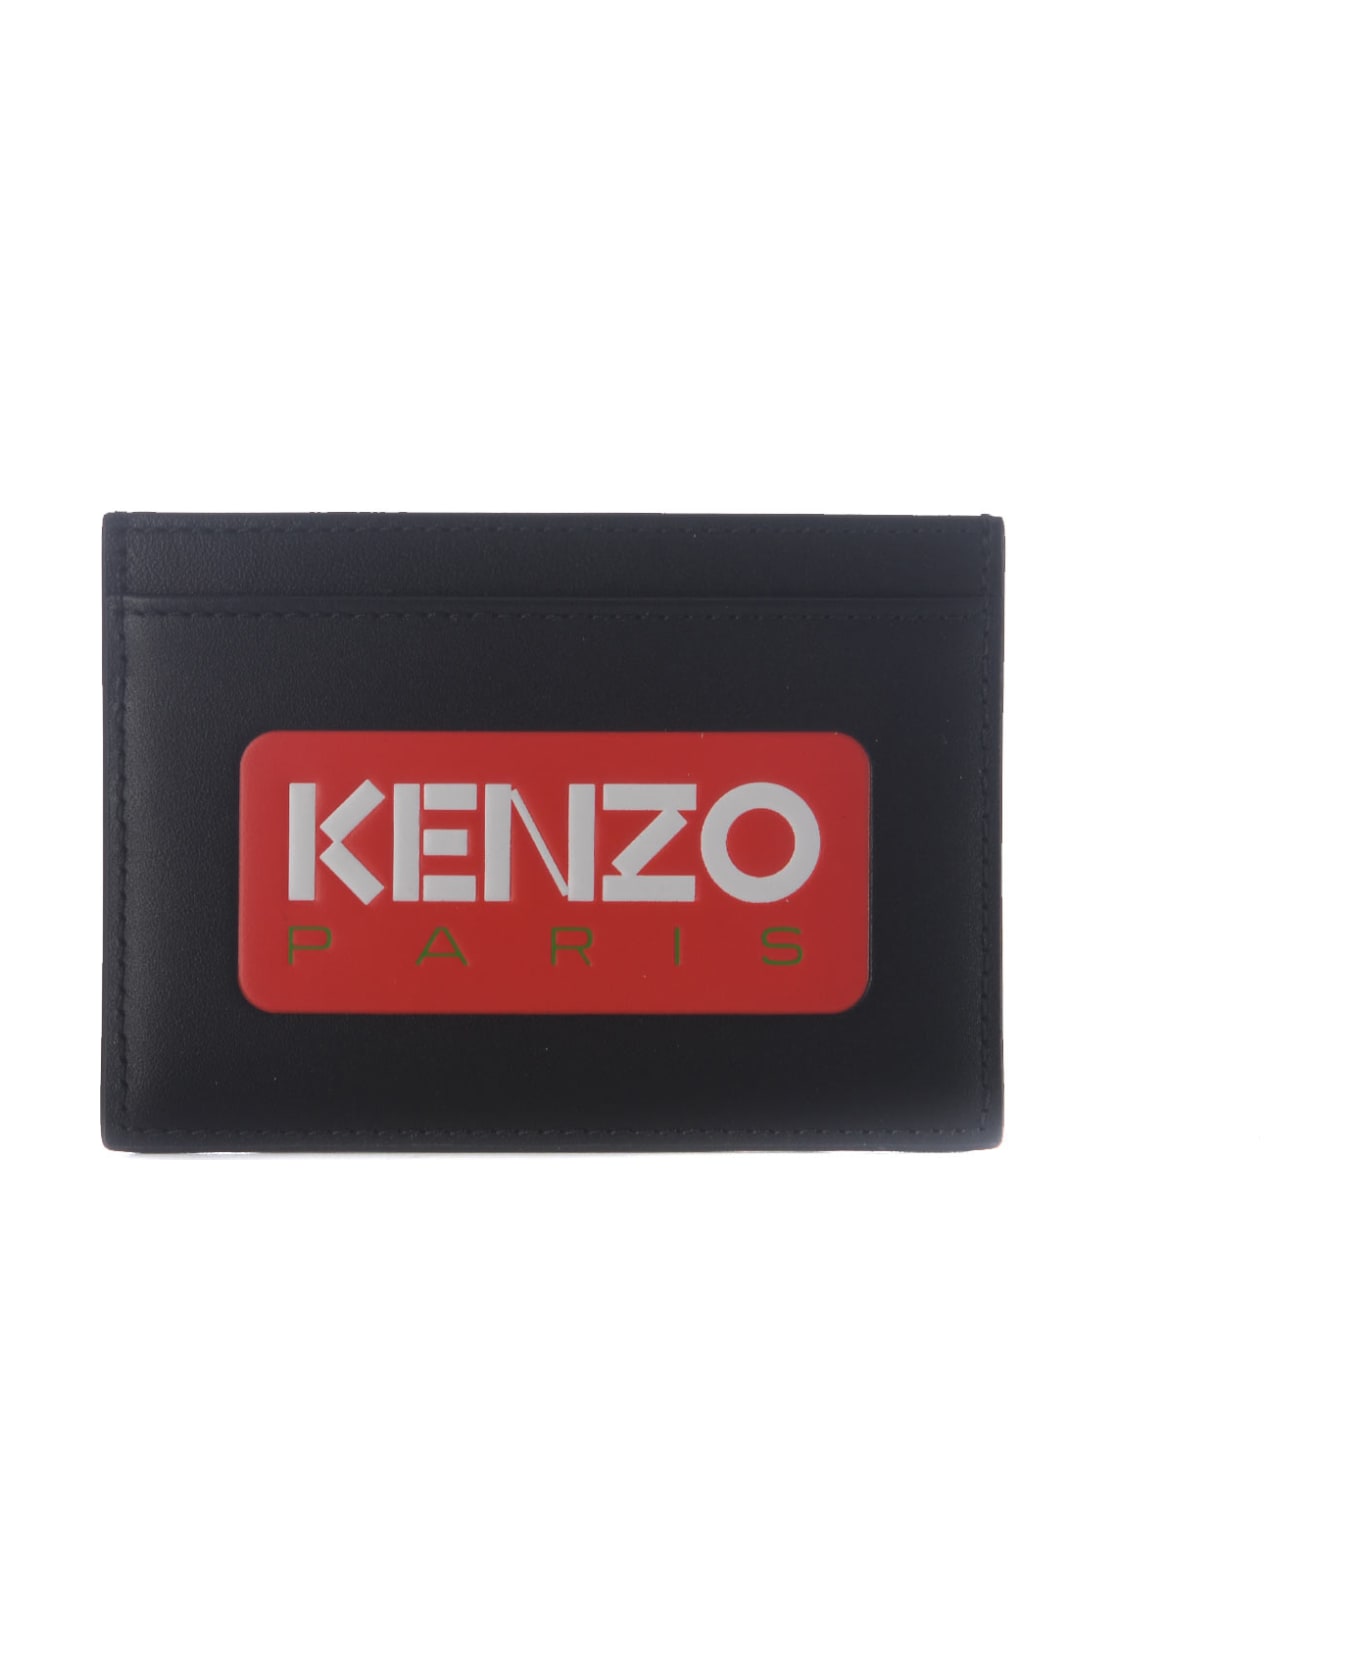 Kenzo Card Holder Kenzo "kenzo Paris" In Leather - Nero